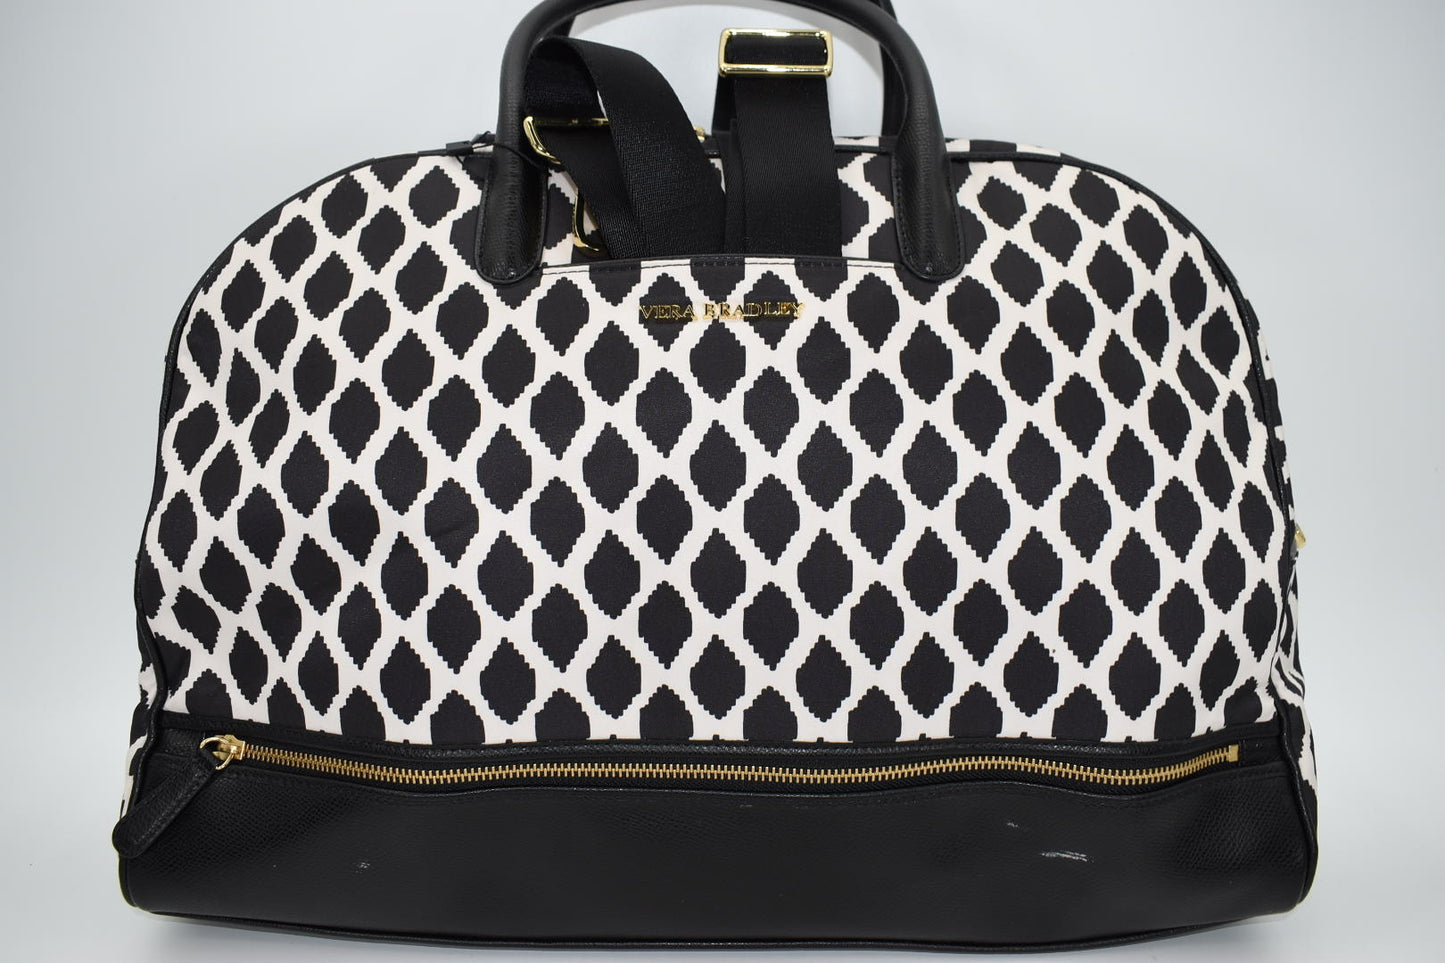 Vera Bradley Leather Trimmed Weekender Bag in "Ikat Spots" Pattern